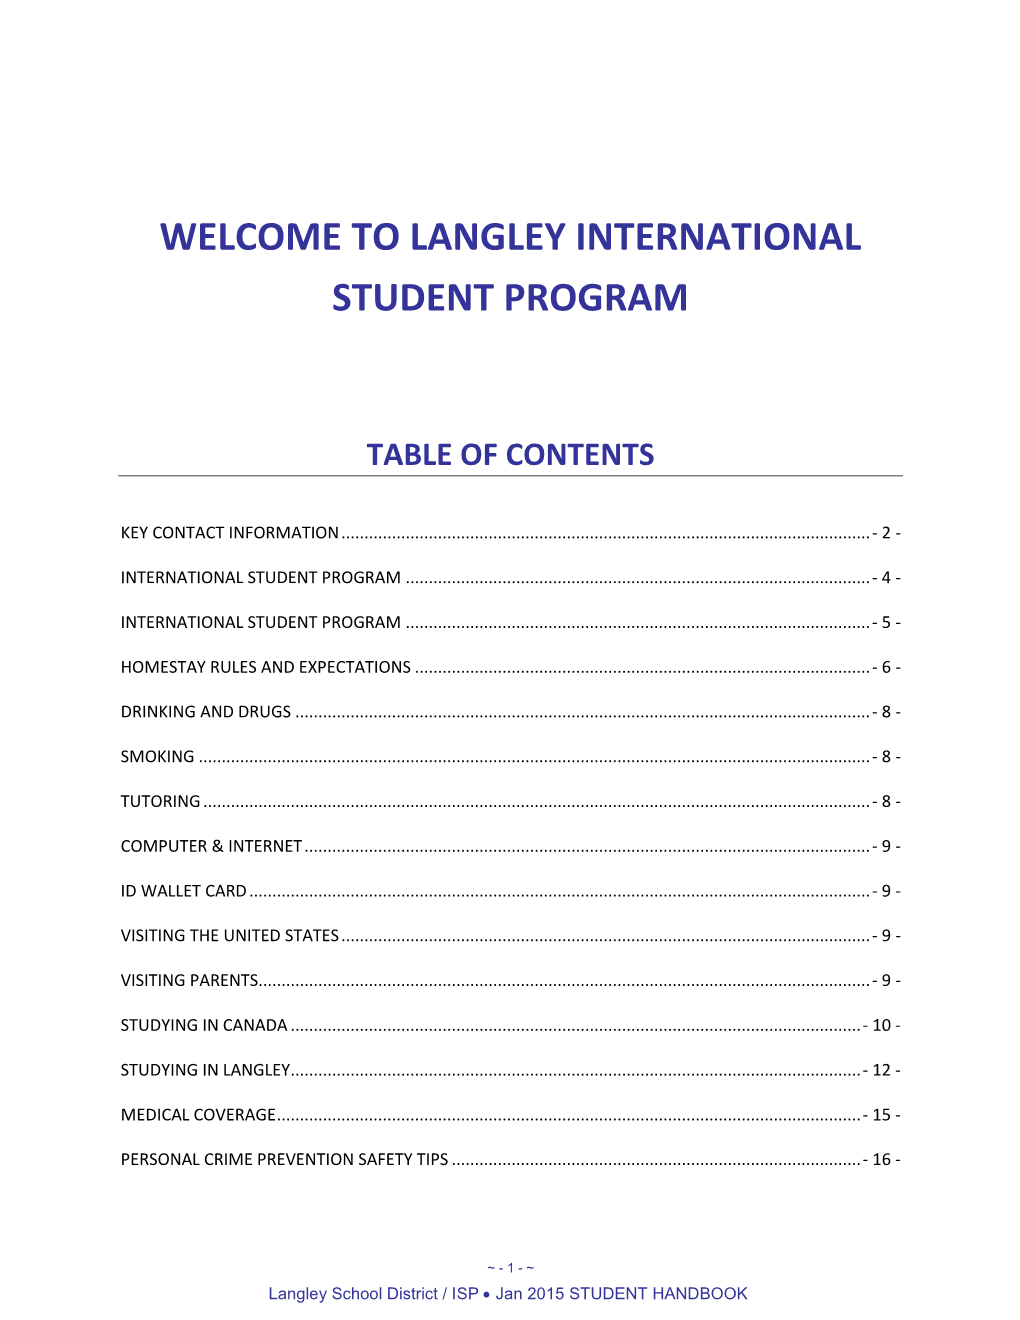 Langley International Student Program